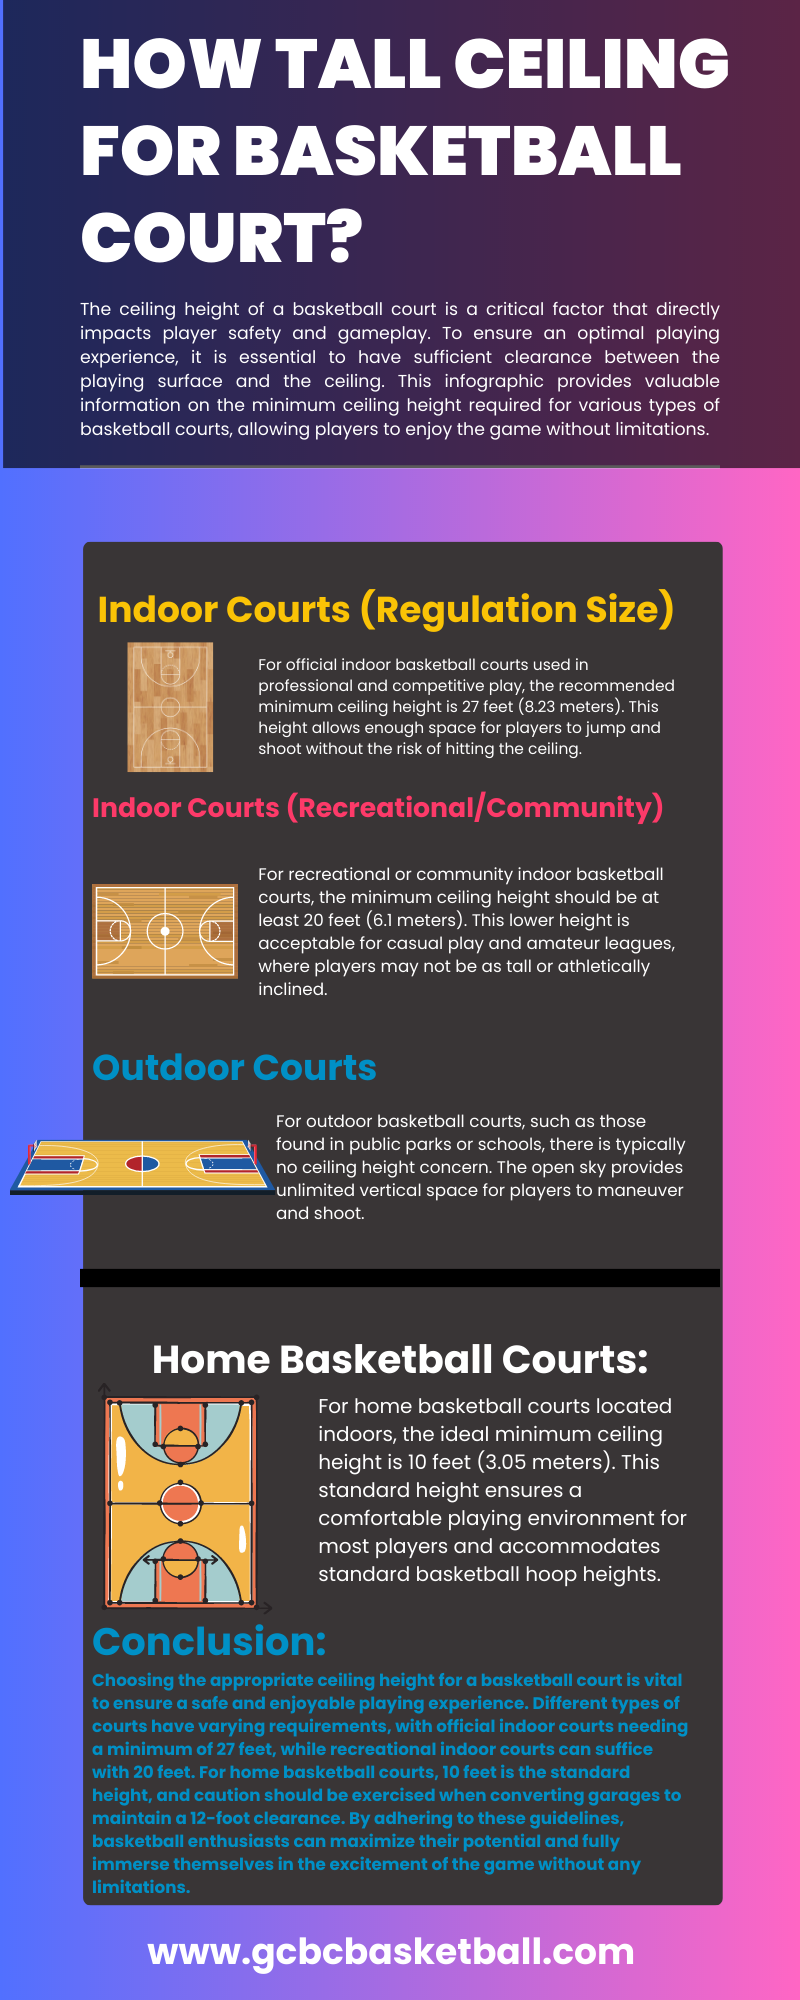 How Tall Ceiling For Basketball Court? GCBCBasketball Blog